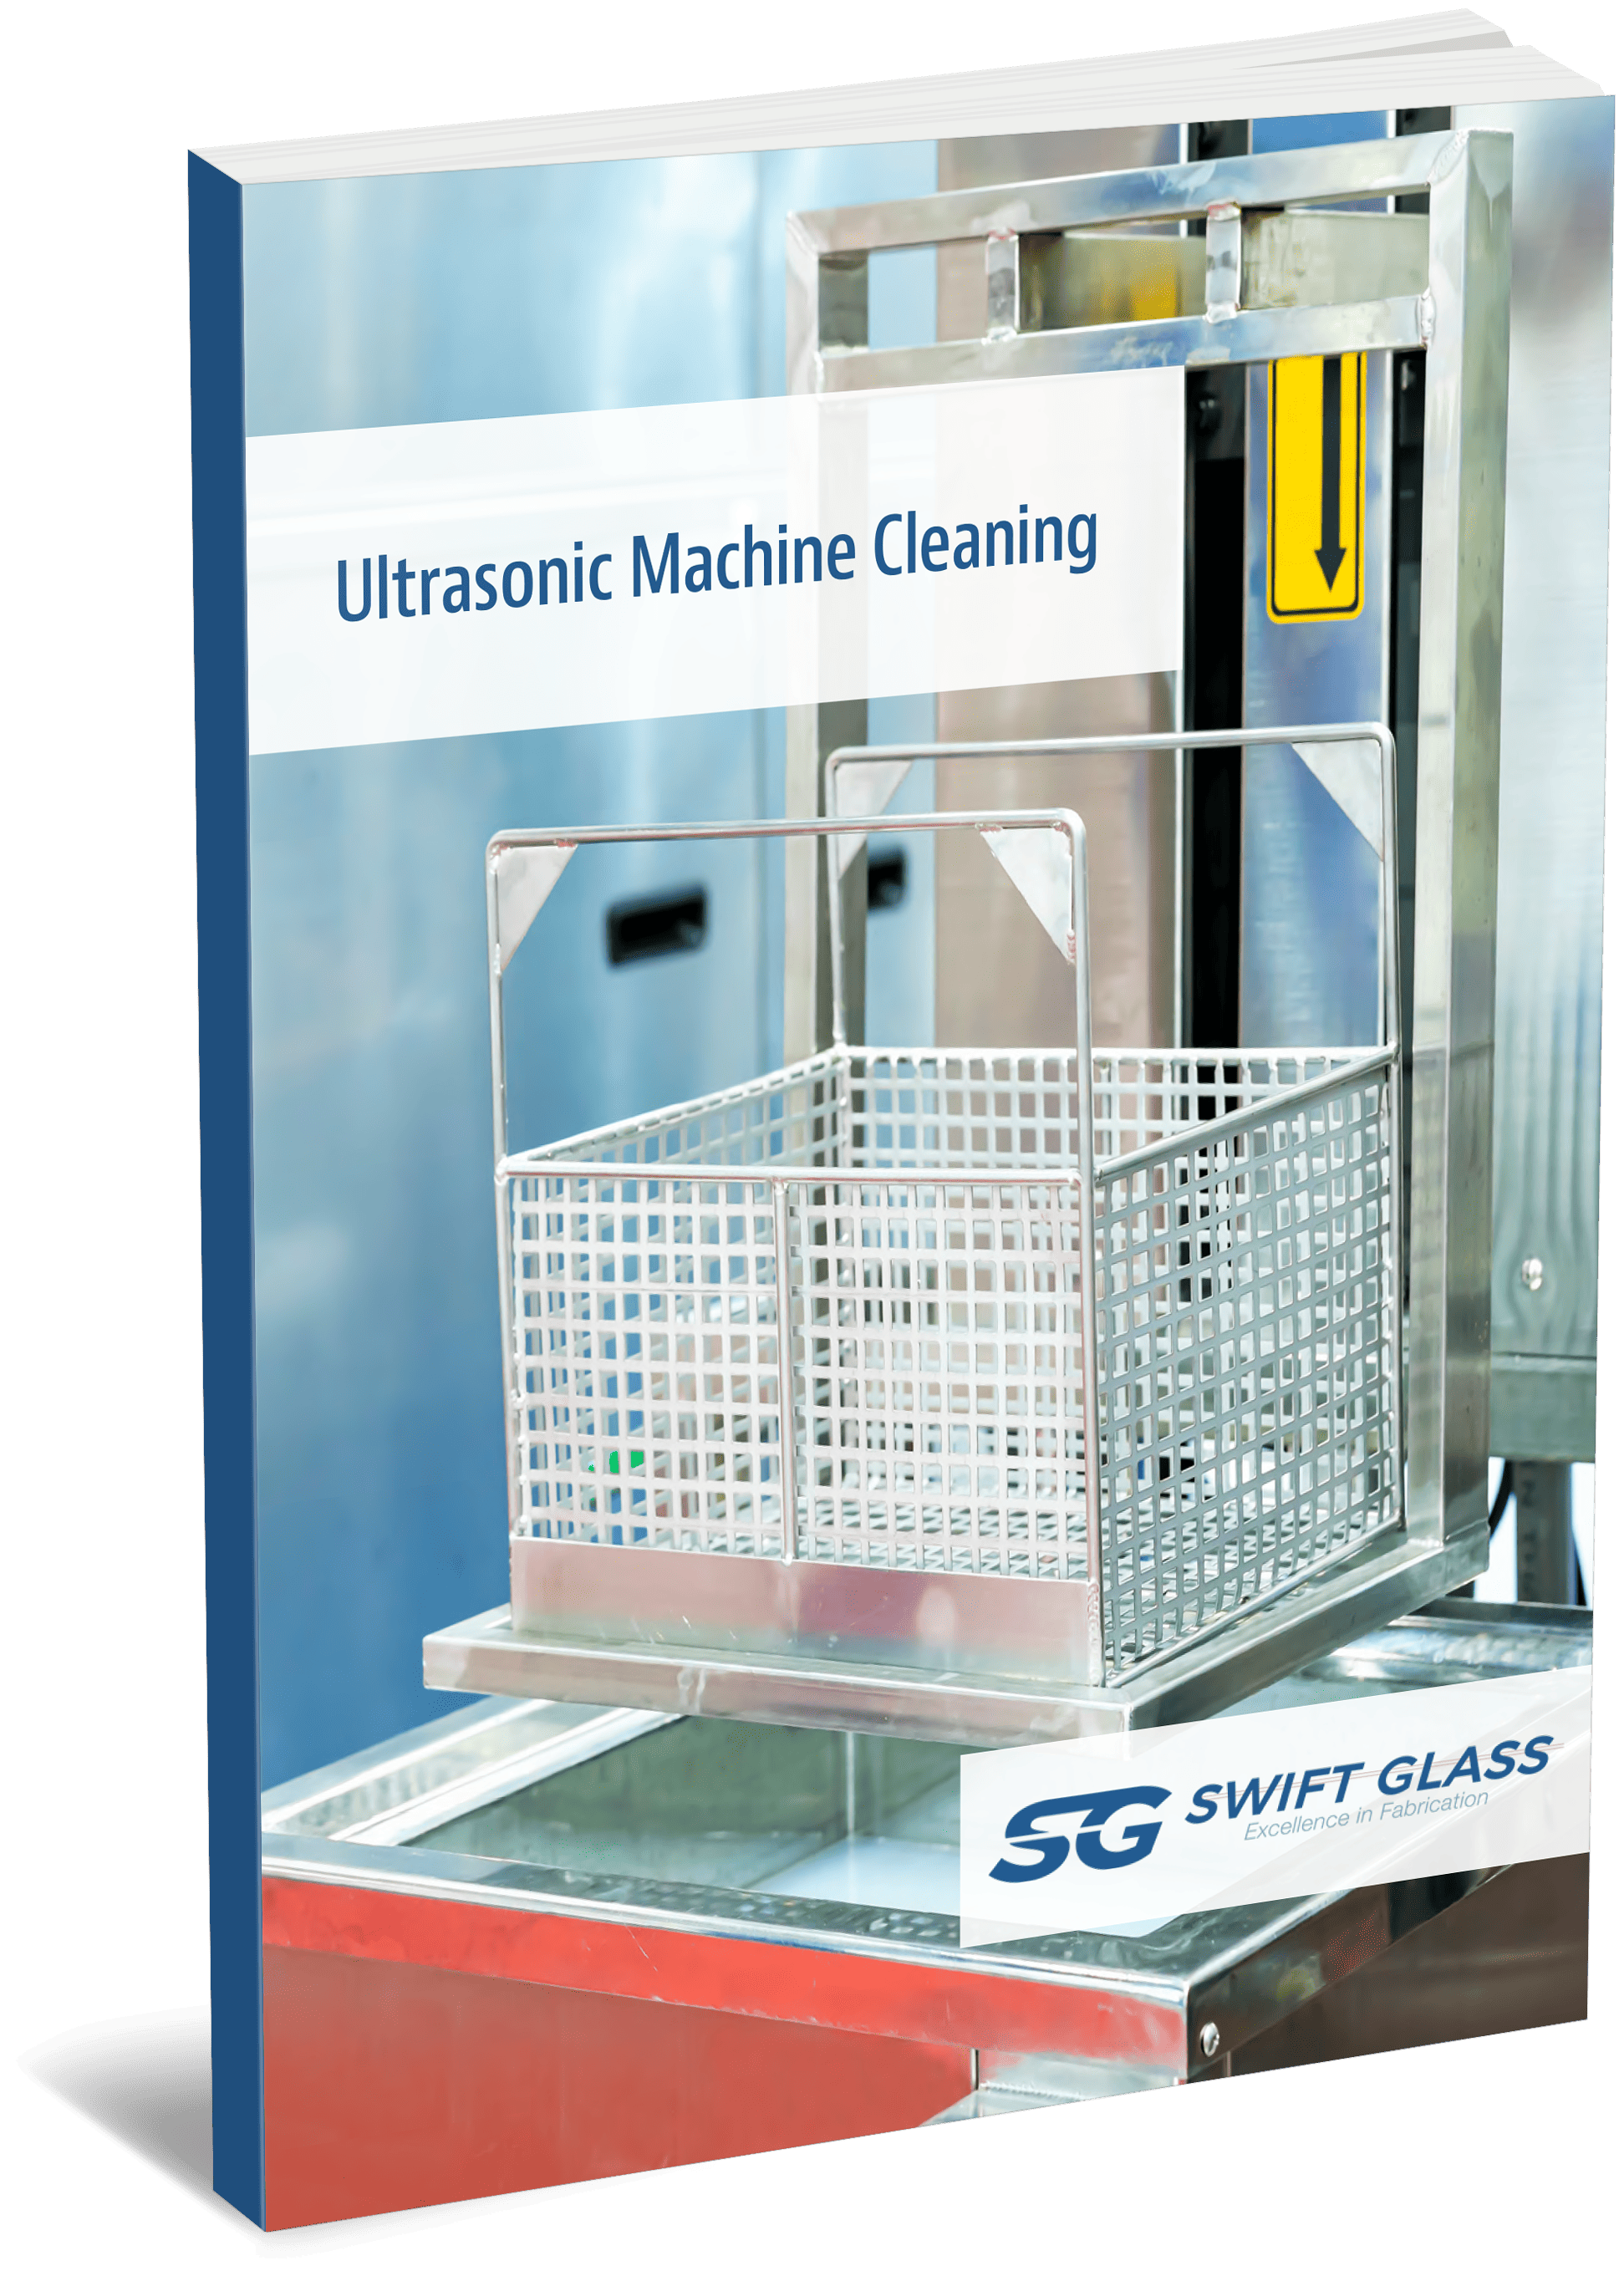 Ultrasonic Machine Cleaning